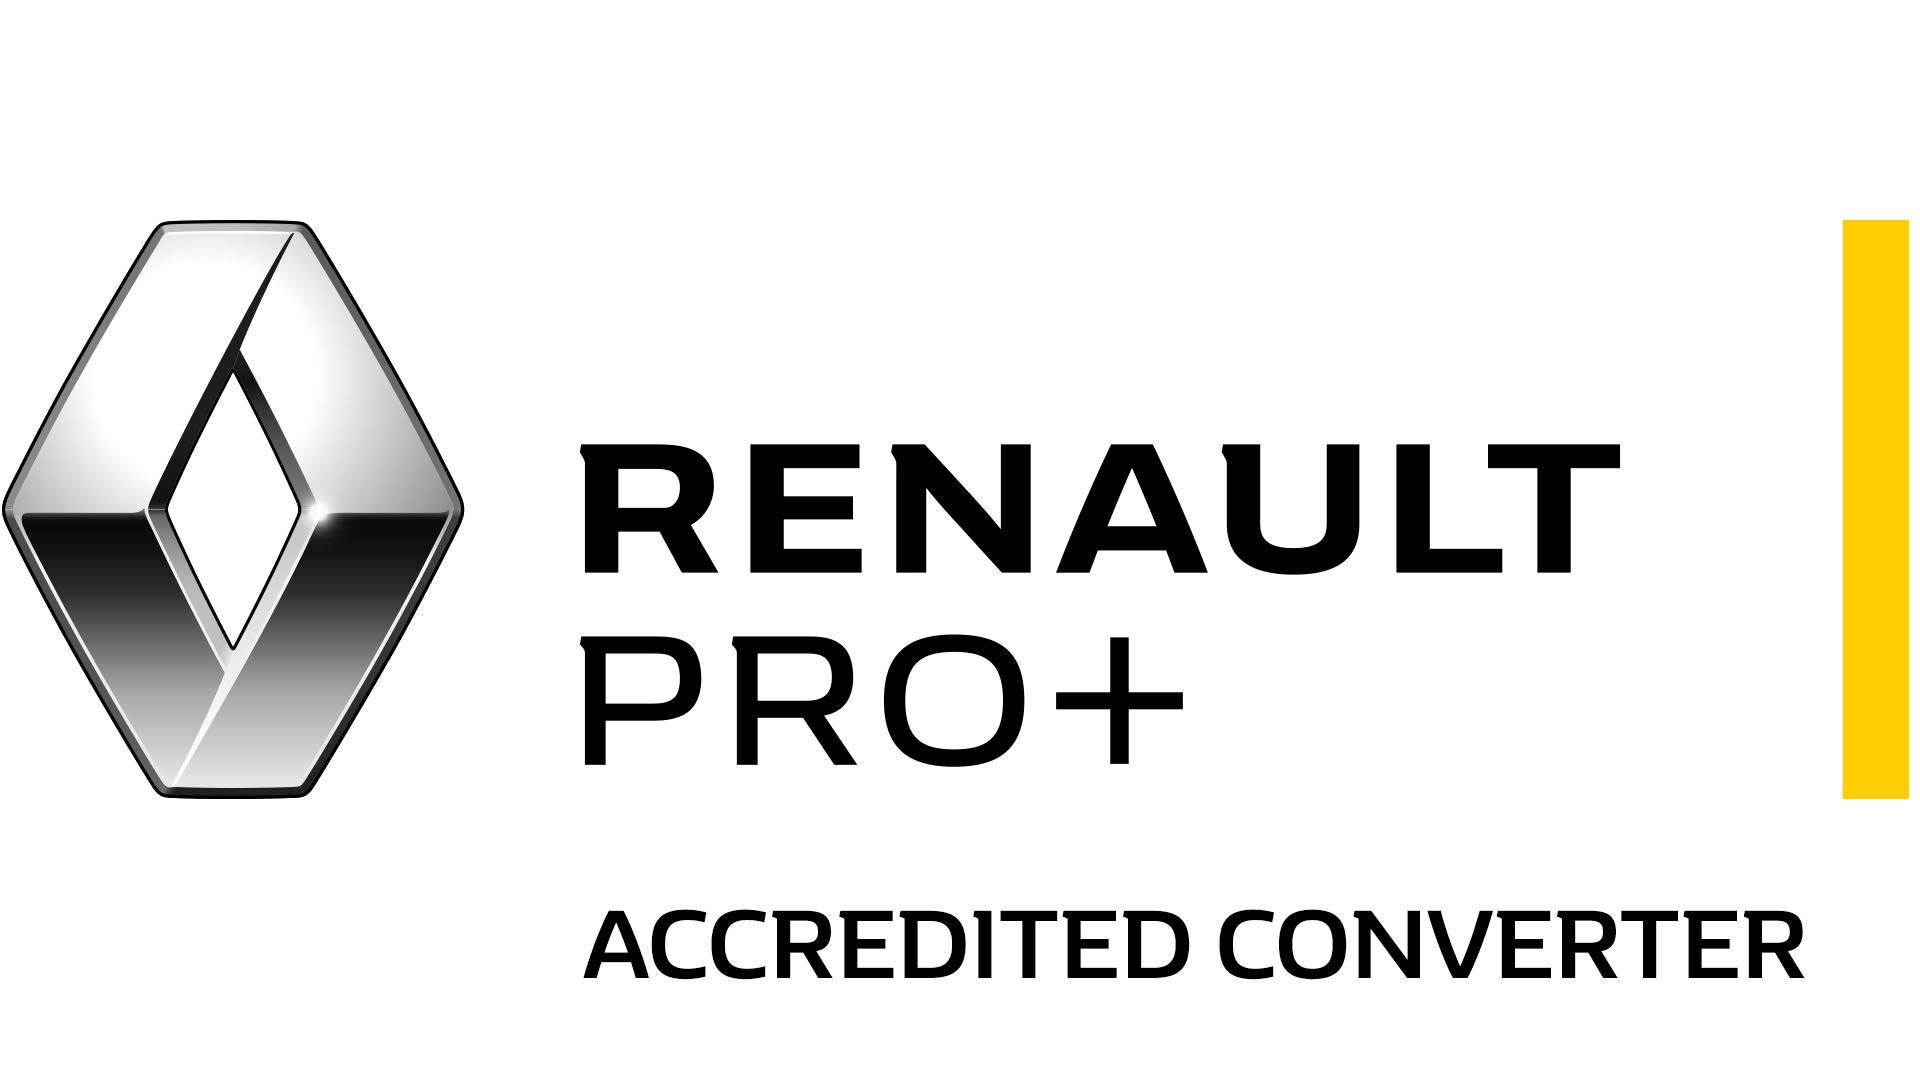 Renault-accredited-converter-logo